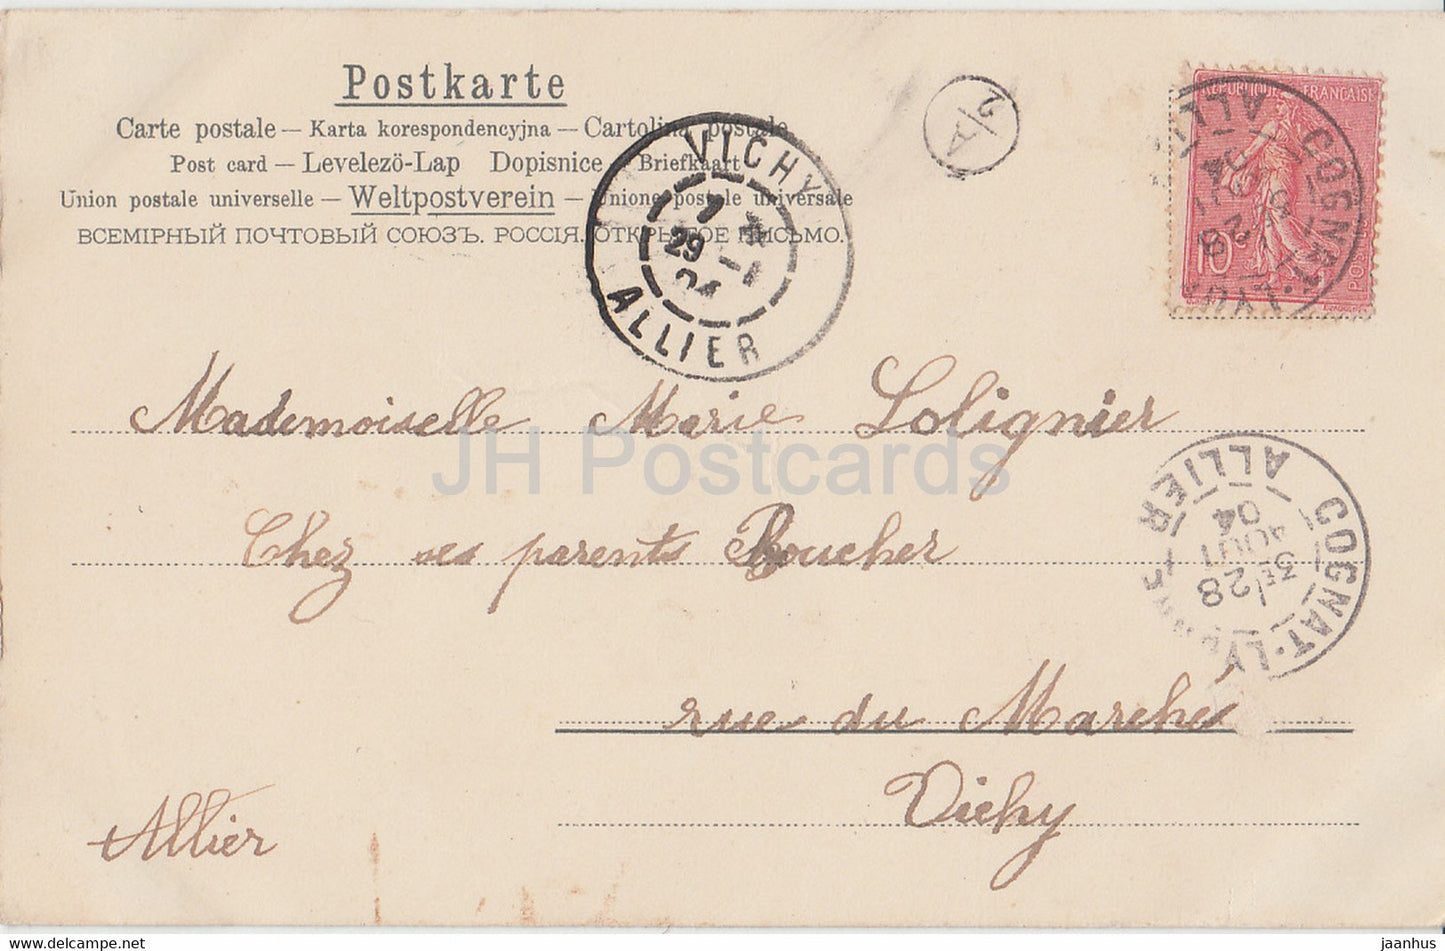 fleurs - roses jaunes - campagne - K &amp; BD - illustration - carte postale ancienne - 1904 - Allemagne - utilisé